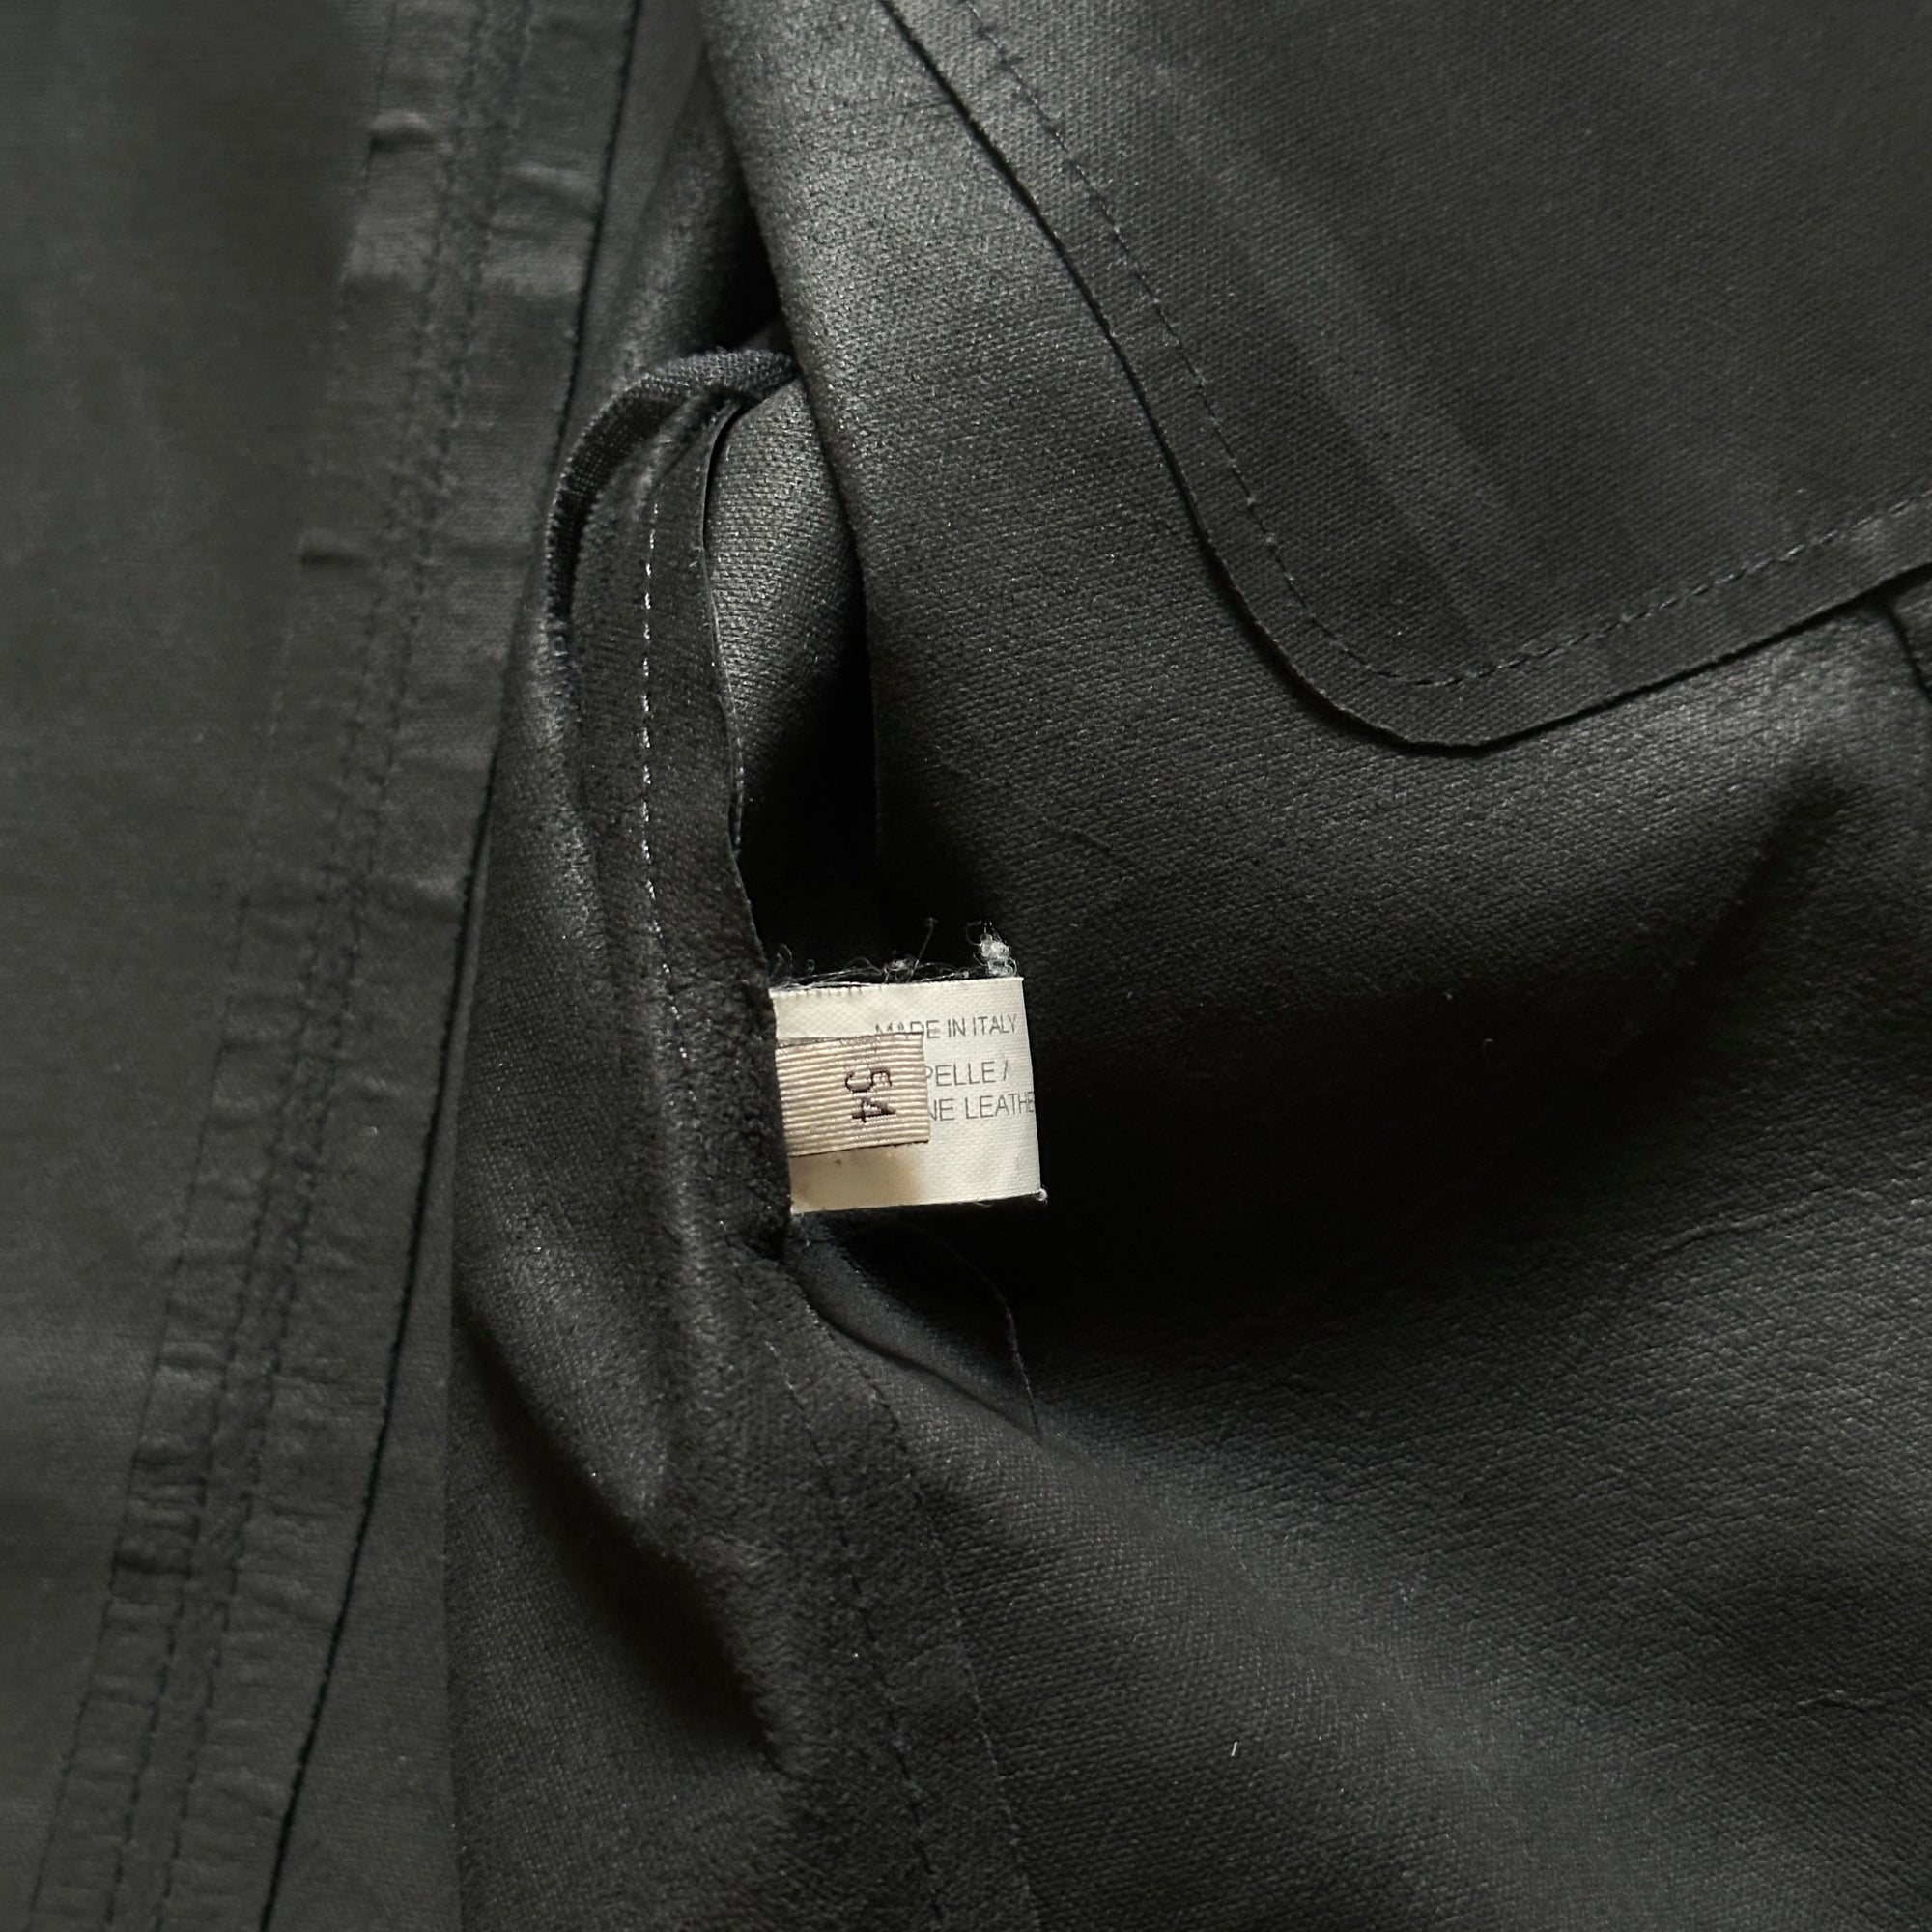 Bottega Veneta Black Leather Shirt